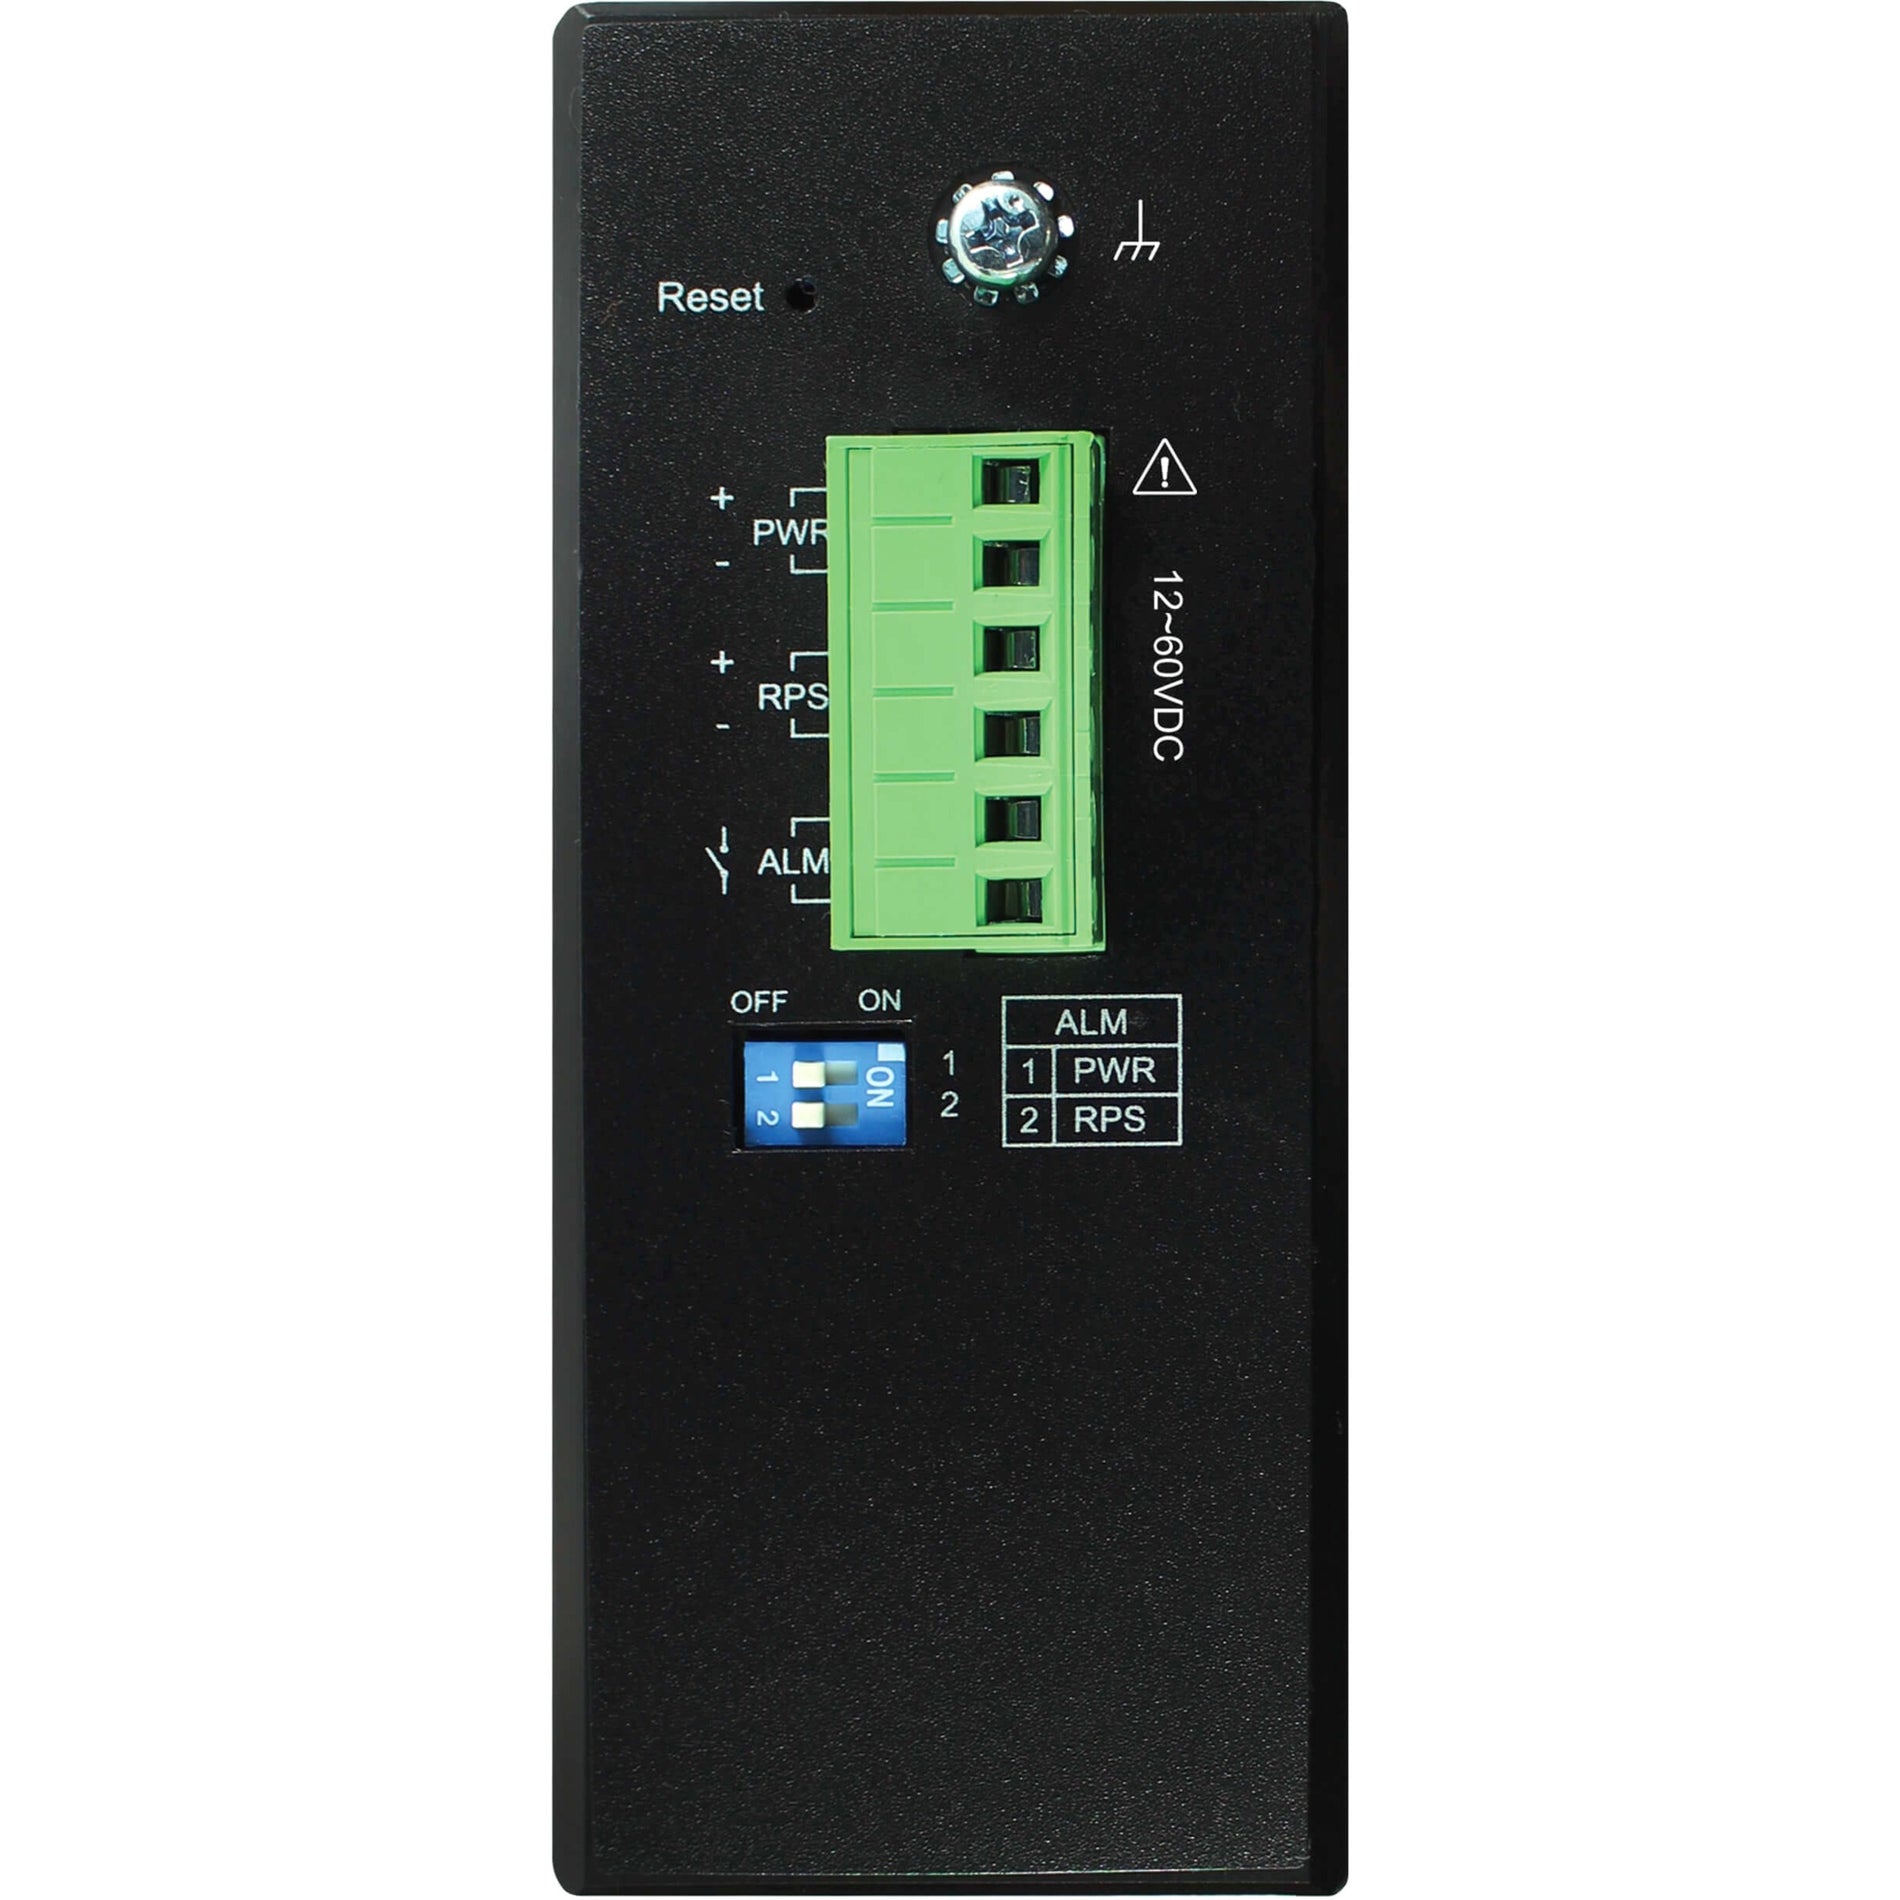 Tripp Lite NGI-S16 Ethernet Switch 16-Port Gigabit Netzwerk TAA Compliant  Brand: Tripp Lite  NGI-S16: NGI-S16  Ethernet Switch: Ethernet-Switch  16-Port: 16 Anschlüsse  Gigabit: Gigabit  Network: Netzwerk  TAA: TAA  Compliant: Konform